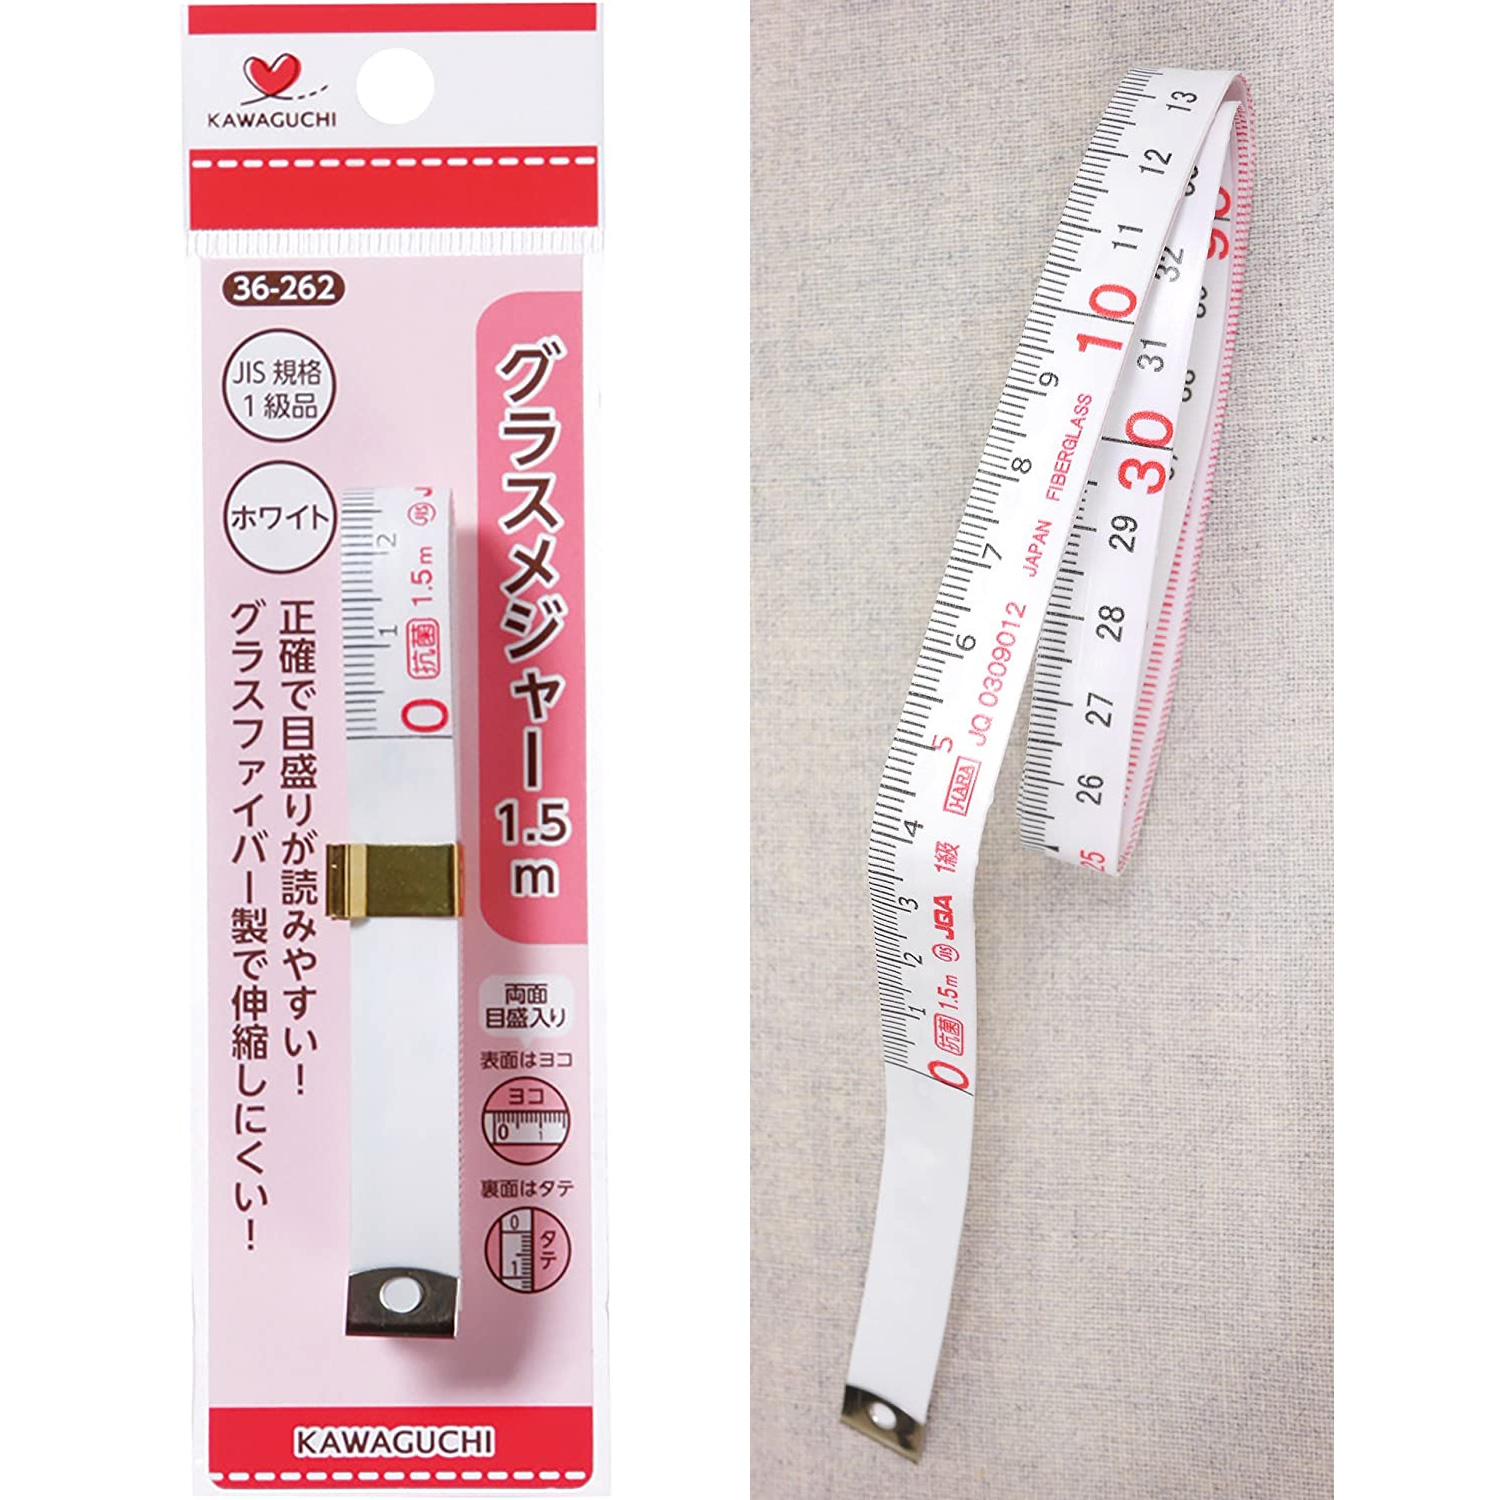 TK36262 KAWAGUCHI Glass Fiber Measuring Tape 1.5m white (pcs)